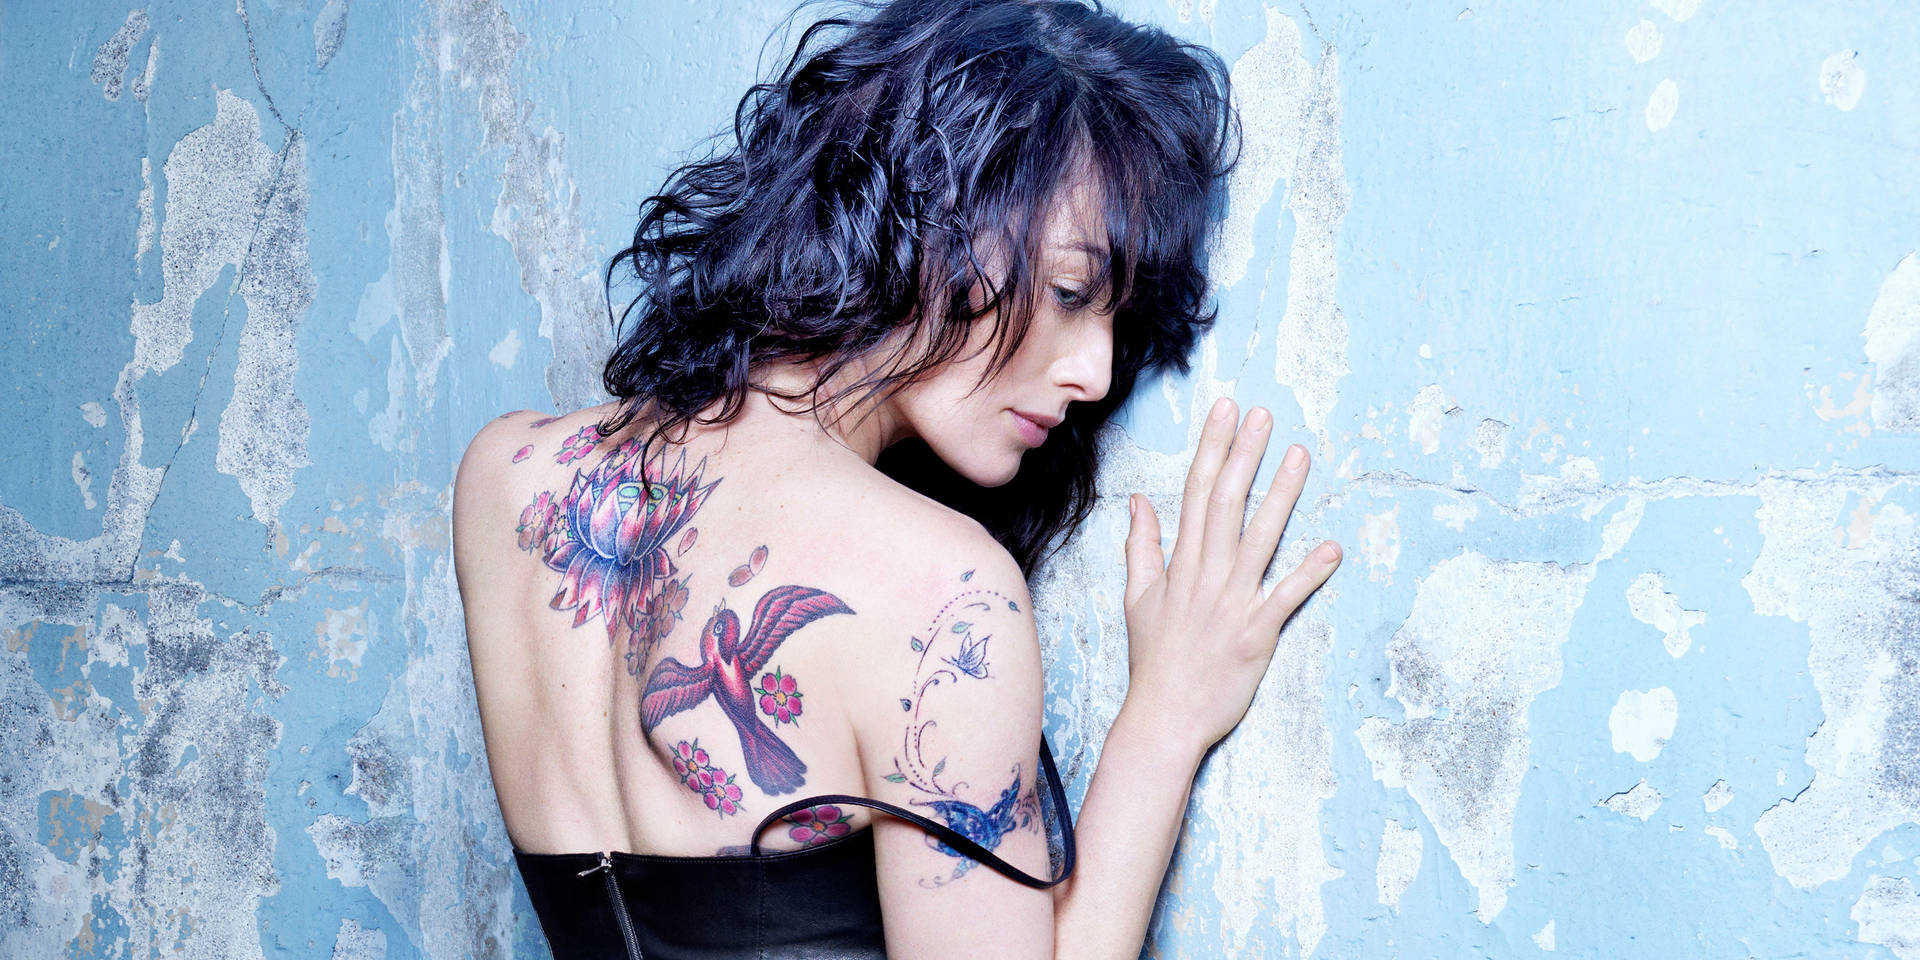 Captivating Art: An Intricate Hd Tattoo On A Woman